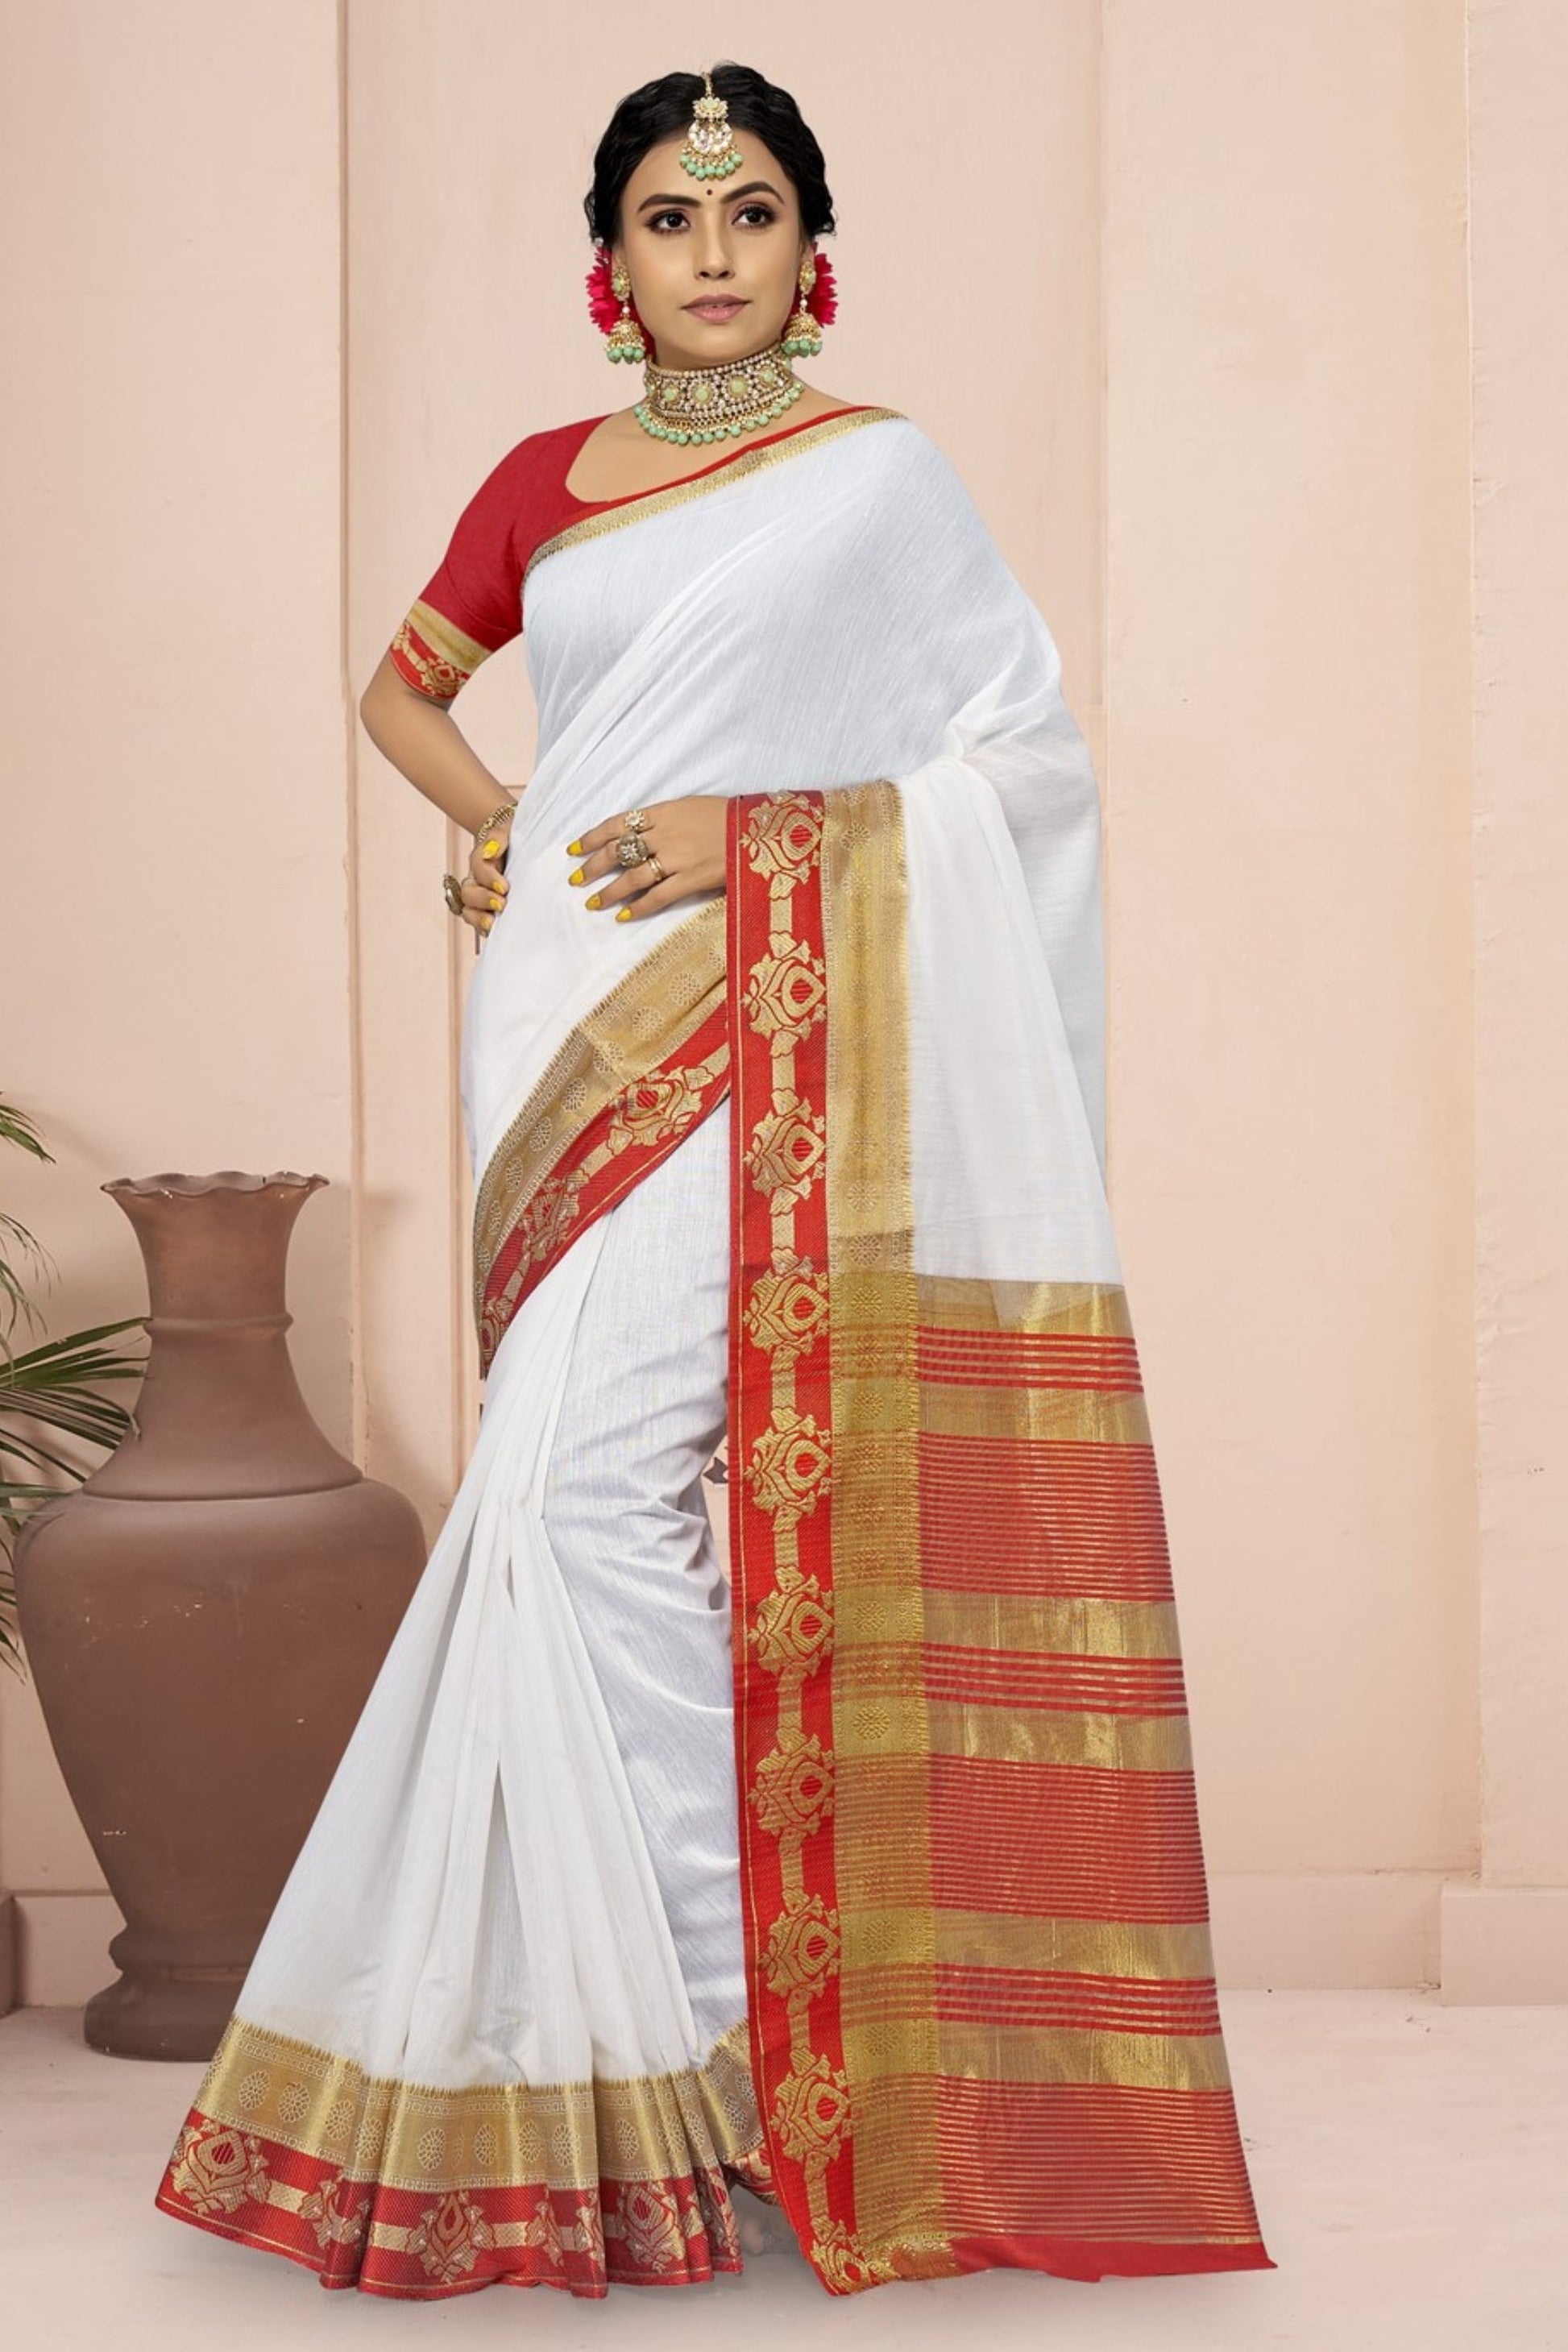 White Cotton Sarees with Blouse for Weddings | Bengali Sari for Festival - Woven